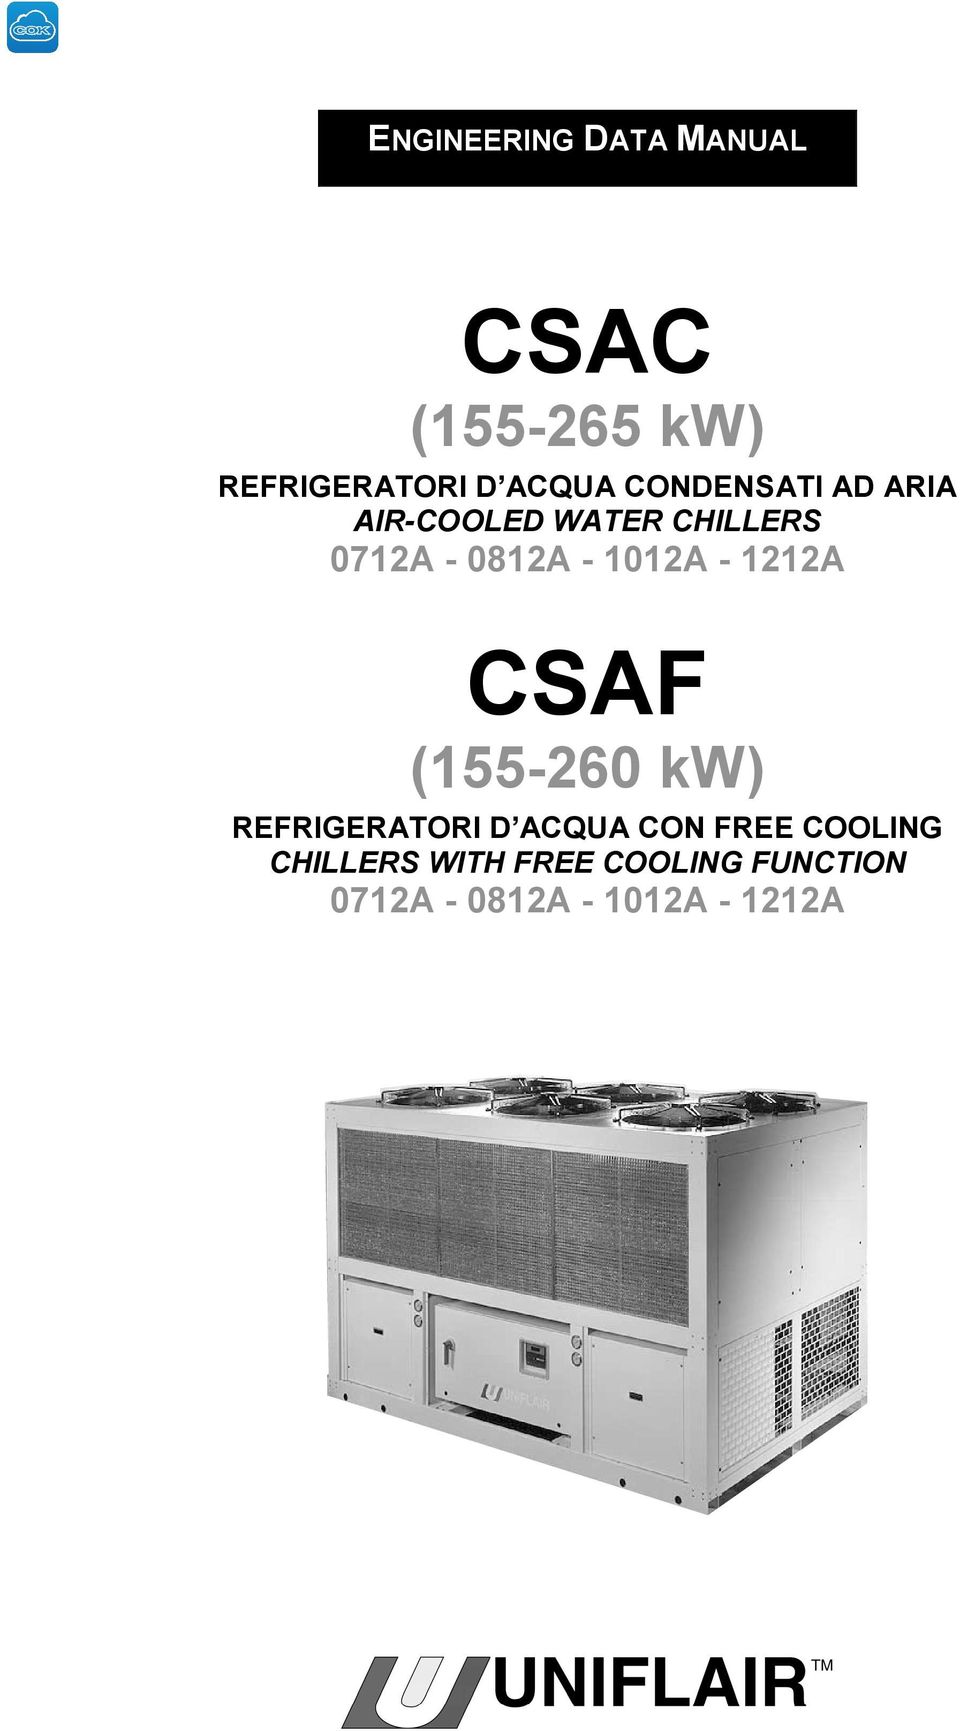 1012A - 1212A CSAF (155-260 kw) REFRIGERATORI D ACQUA CON FREE